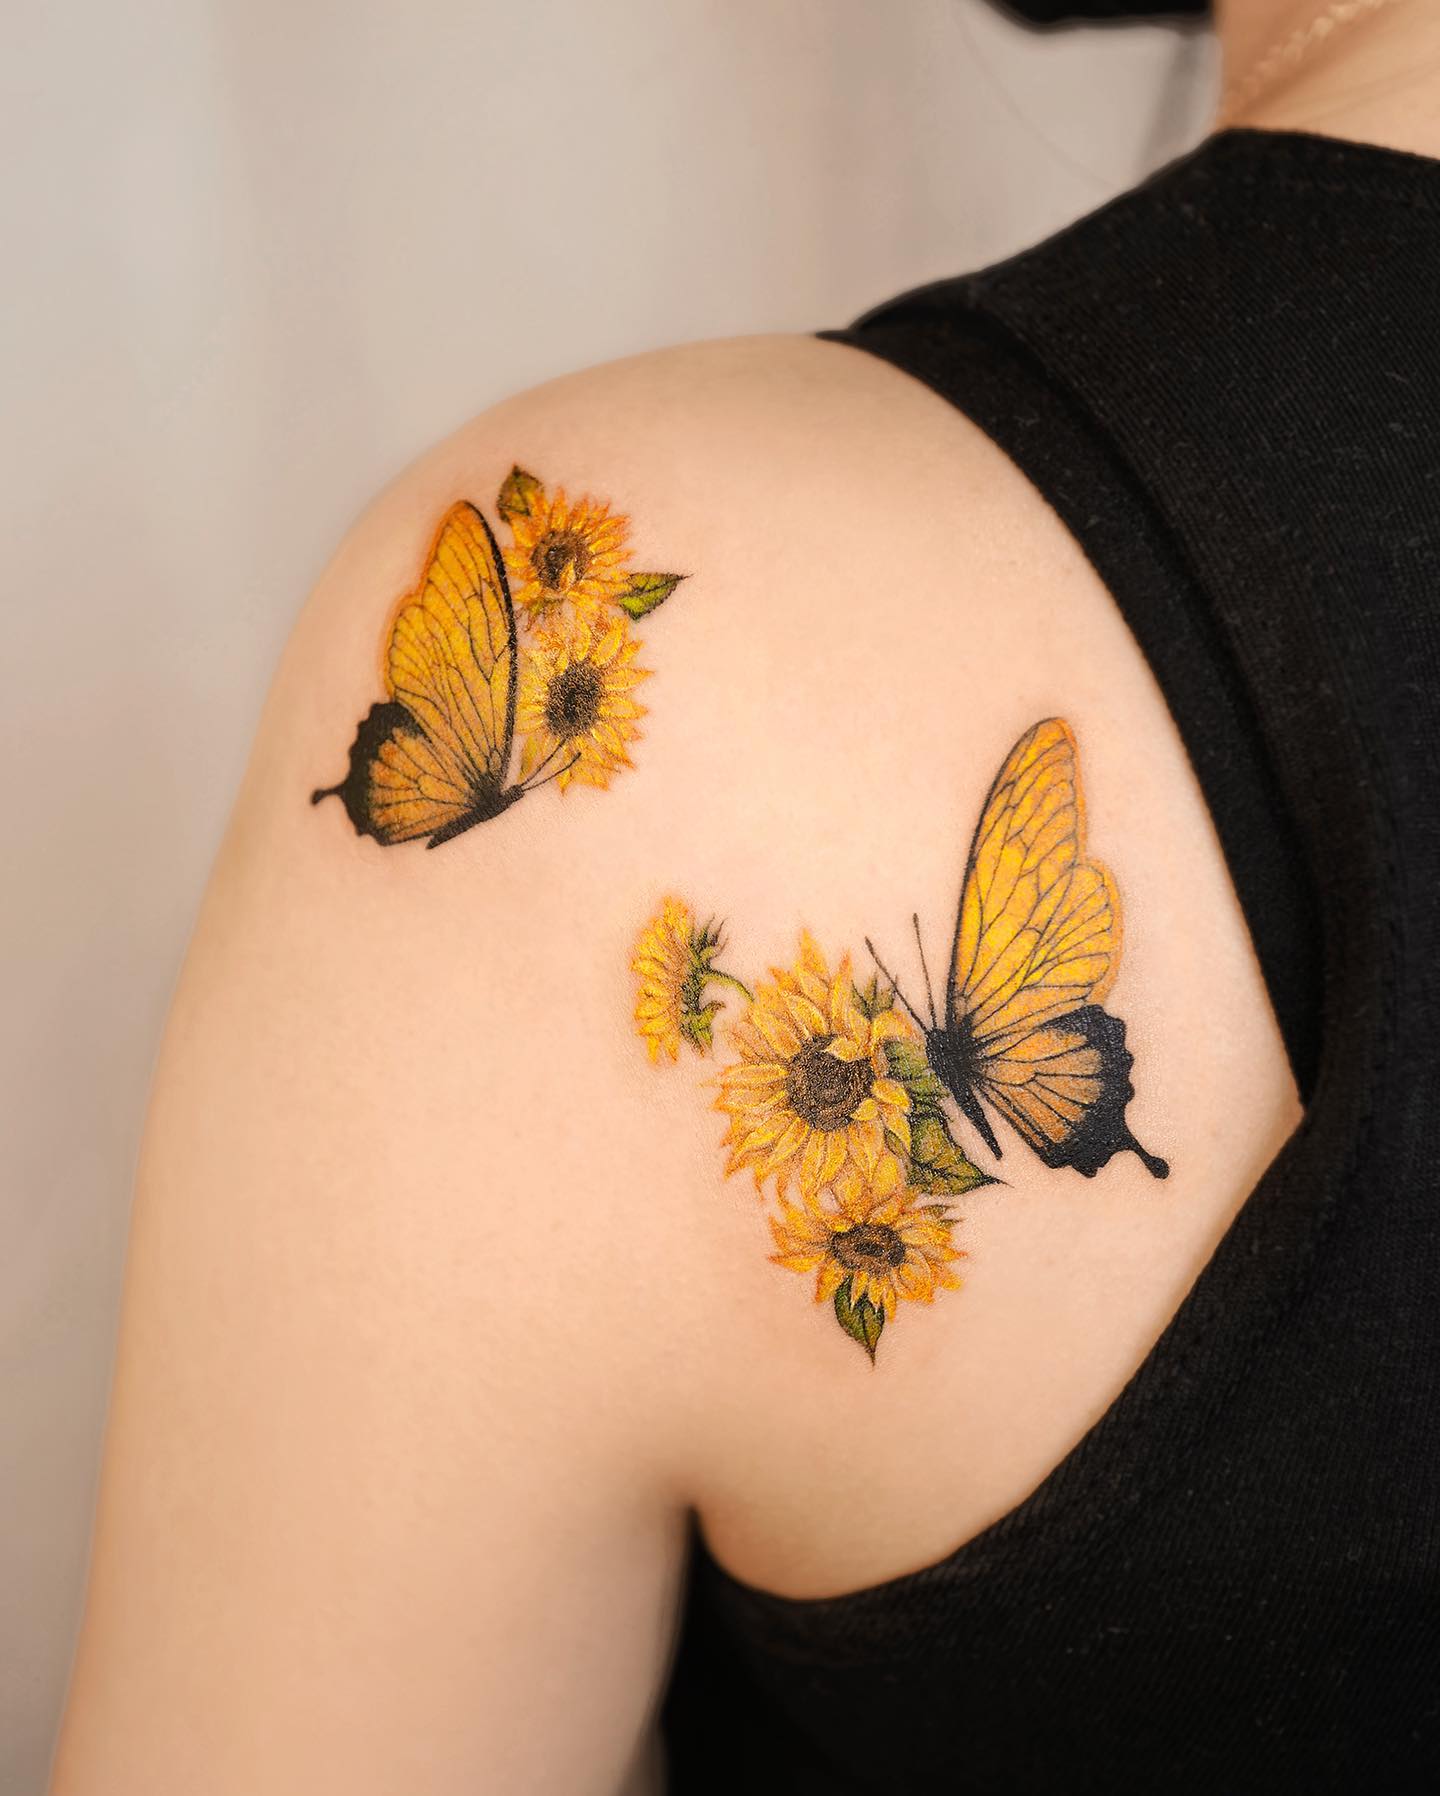 Tatuaje de girasol y mariposa